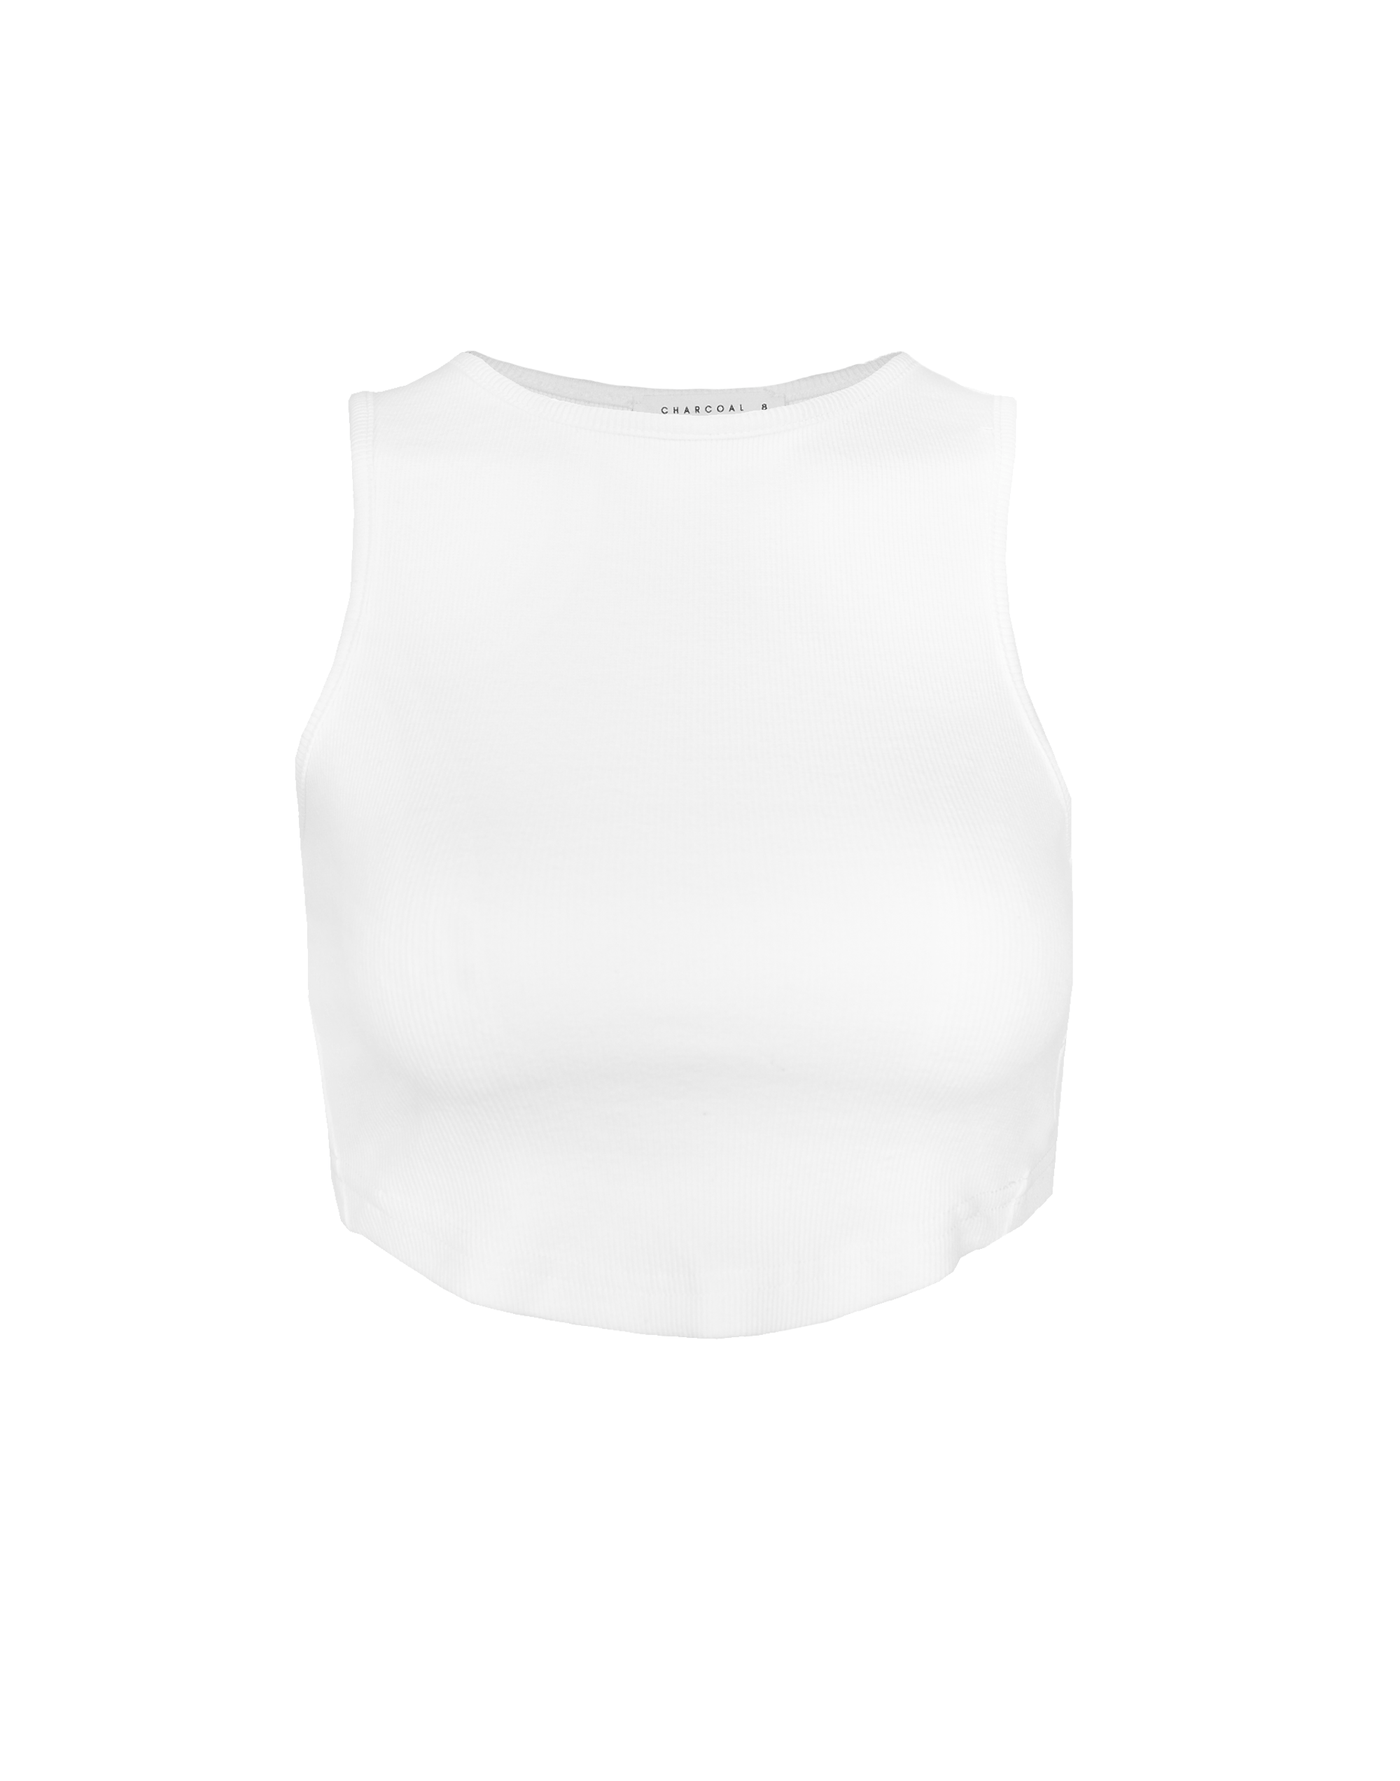 Gigi Rib Tank (White) - Ribbed Tank Top - Women's Top - Charcoal Clothing